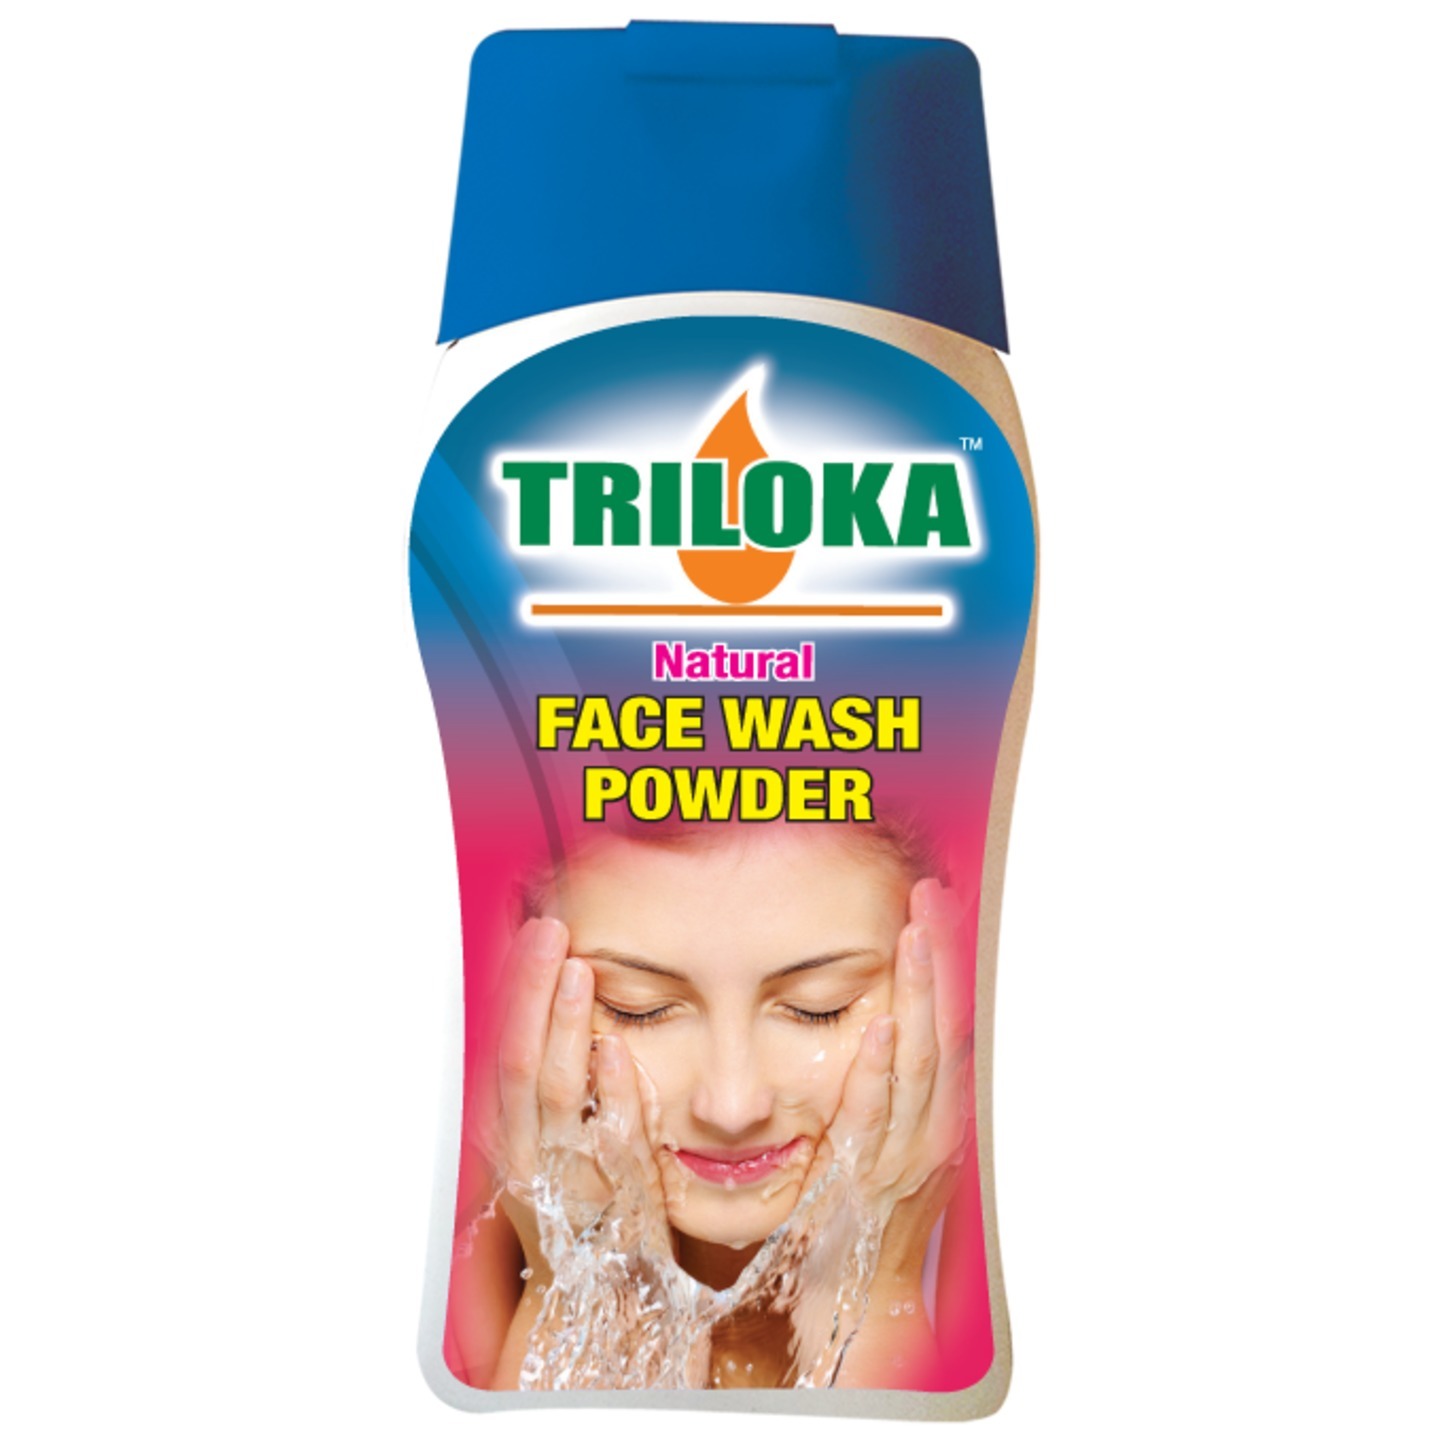 New Triloka FaceWash Powder Bottle( Powder) - 1 Case